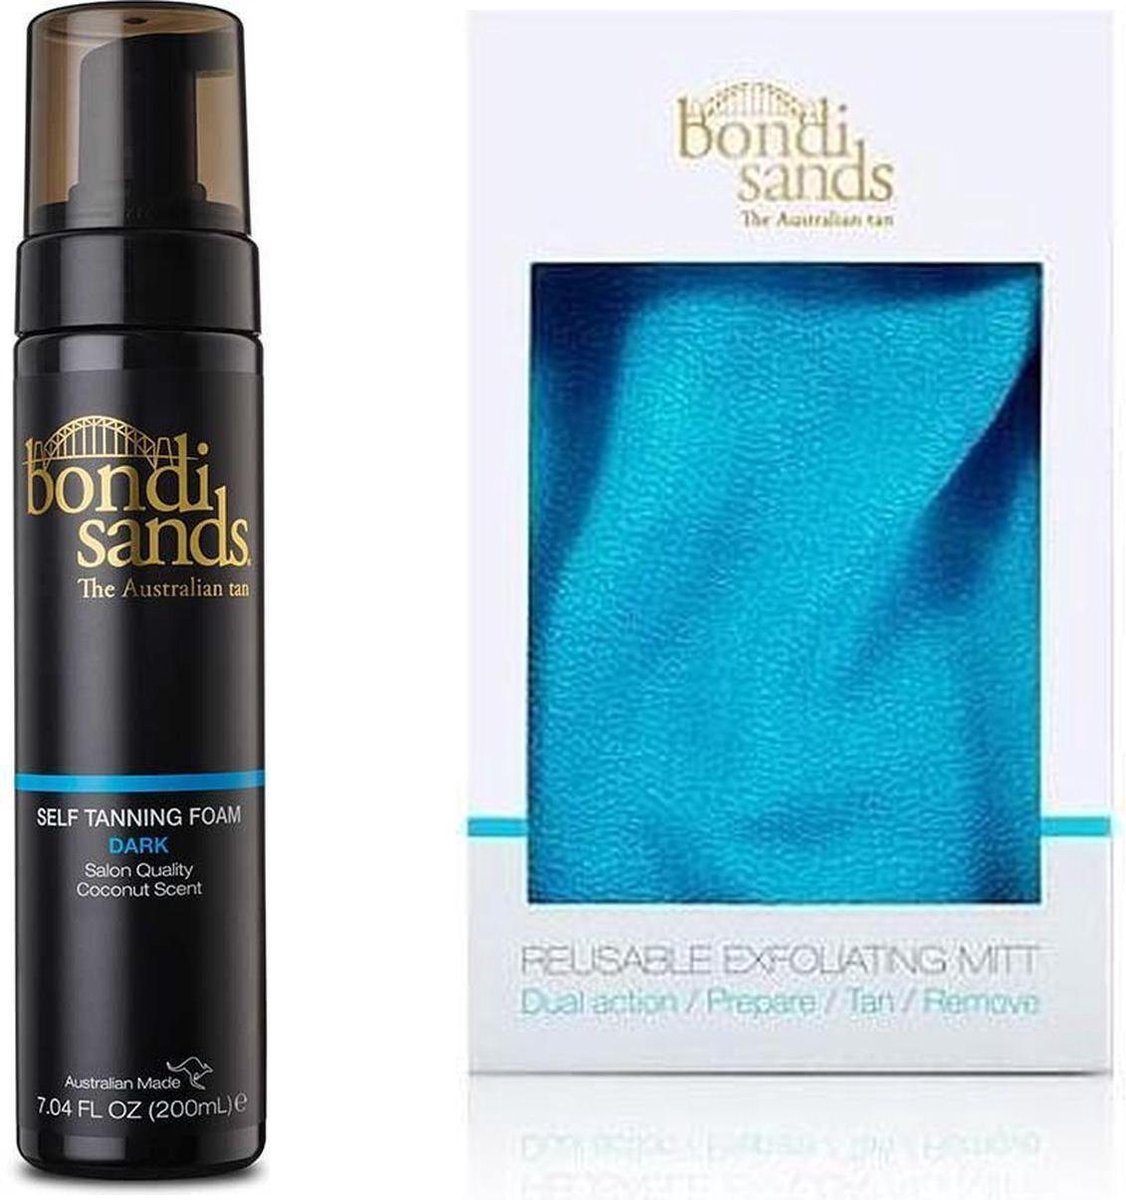 Bondi Sands - Self Tanning Foam Dark en Reusable Exfoliating Mitt